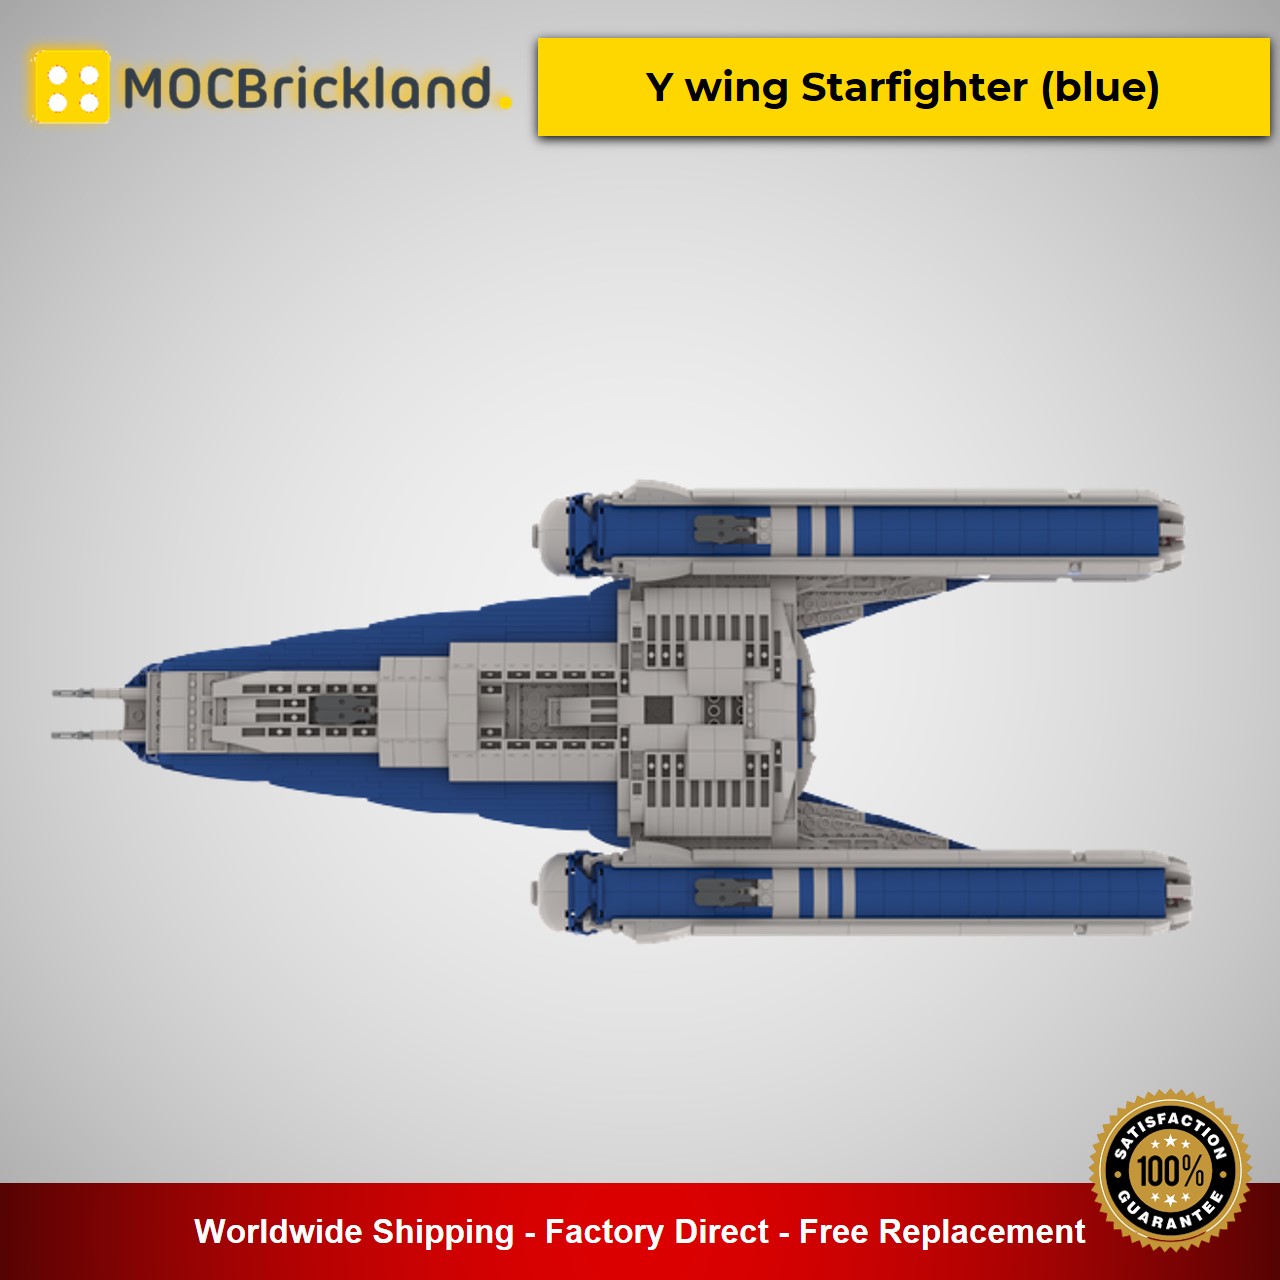 star wars moc 55736 y wing starfighter blue by starwarsfan66 mocbrickland 2856